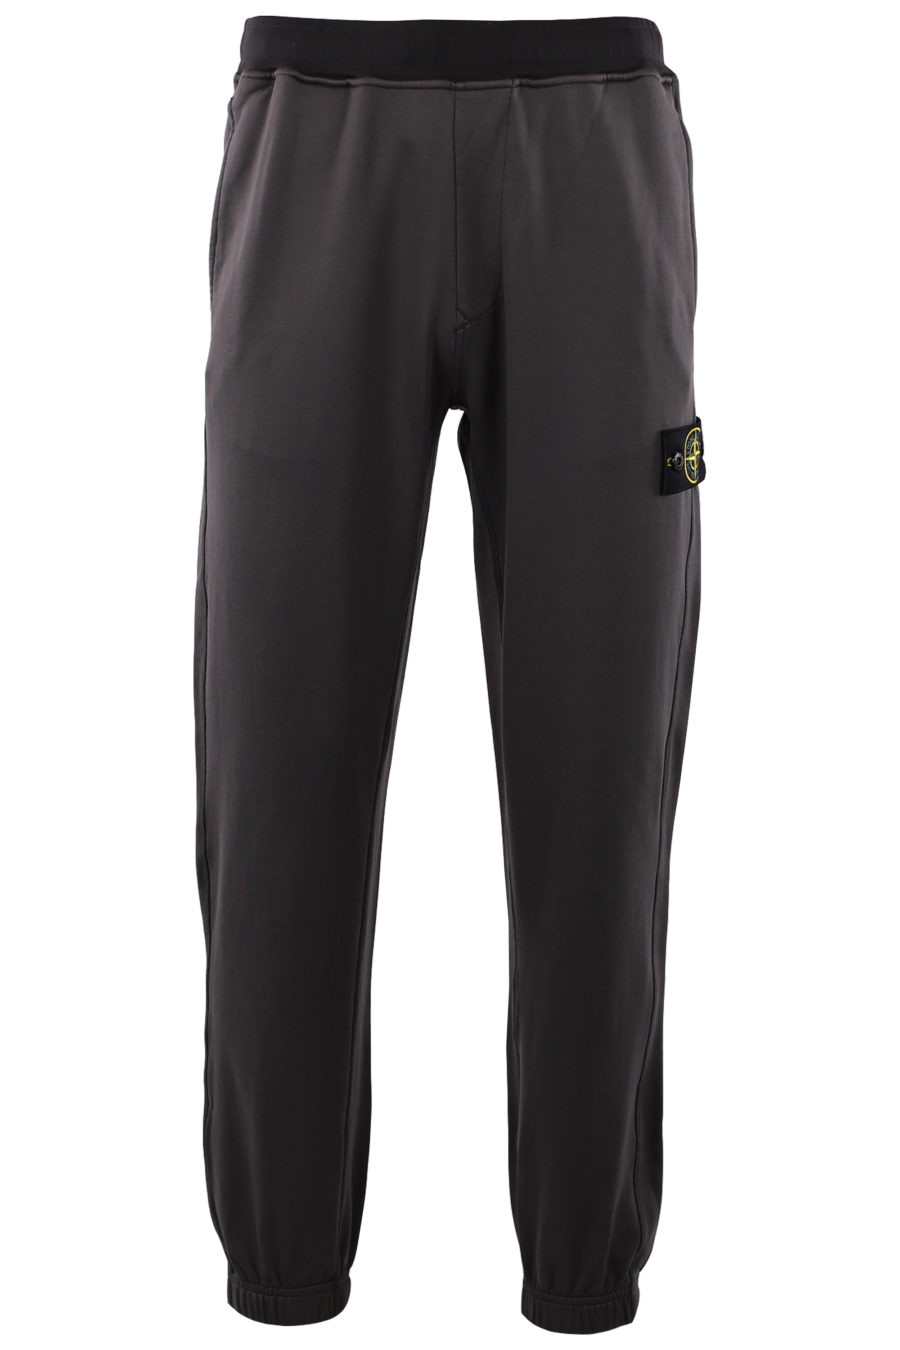 Pantalón de color gris metalizado con logotipo parche - IMG 9170